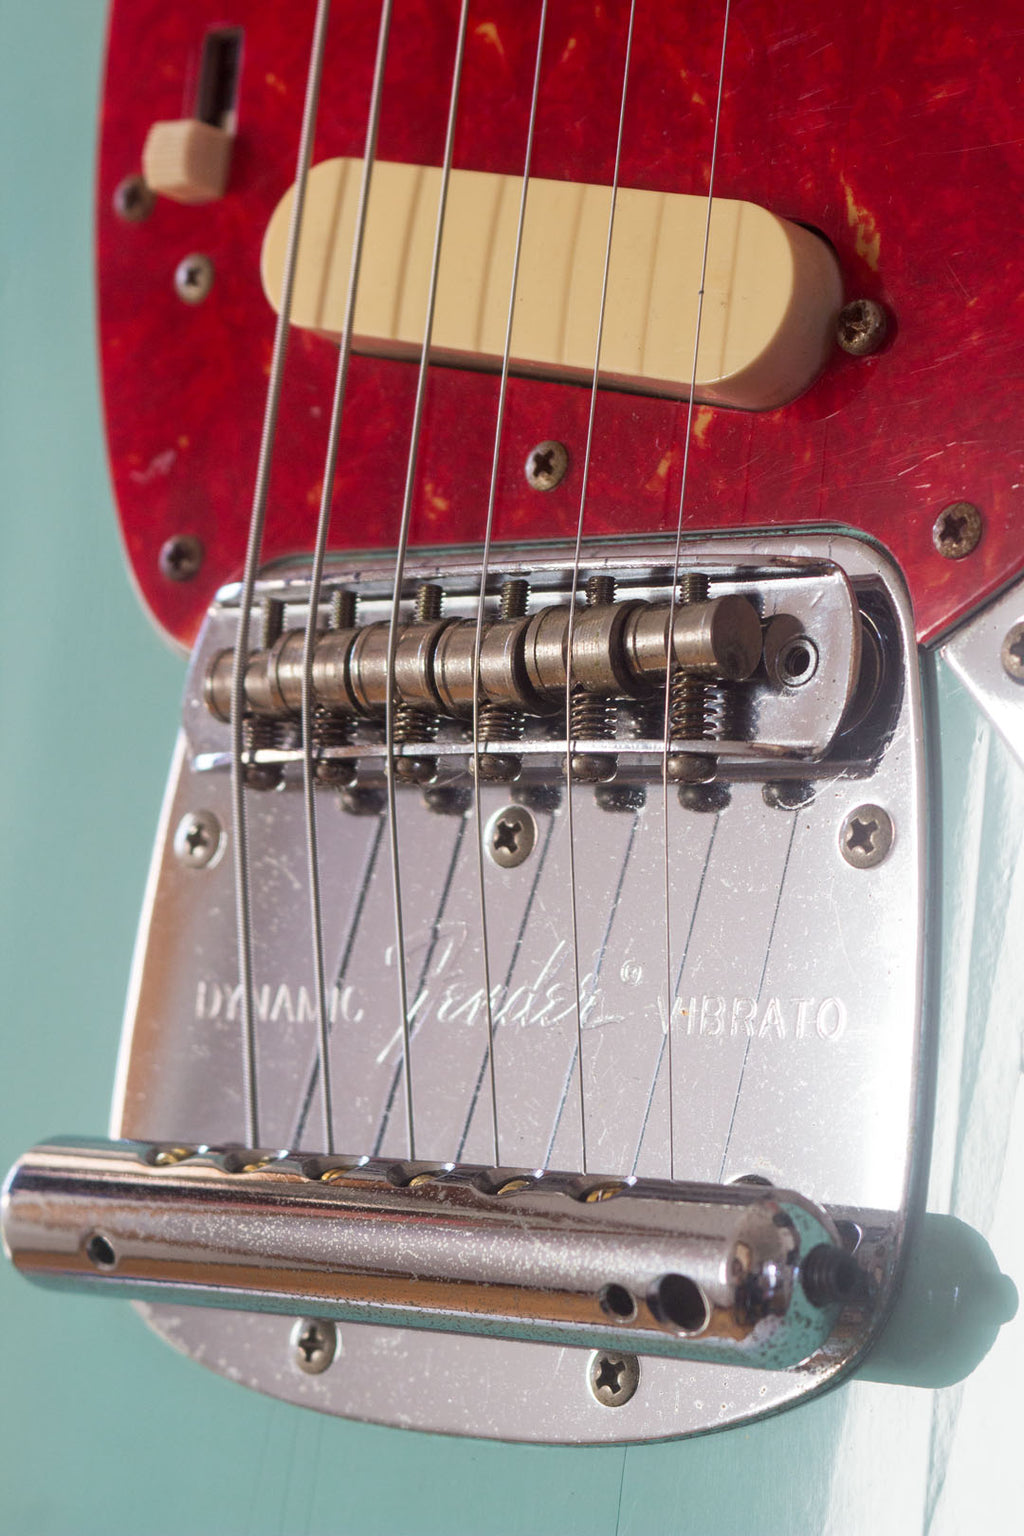 Fender Japan '69 Reissue Mustang MG69-65 Aged Sonic Blue 1995